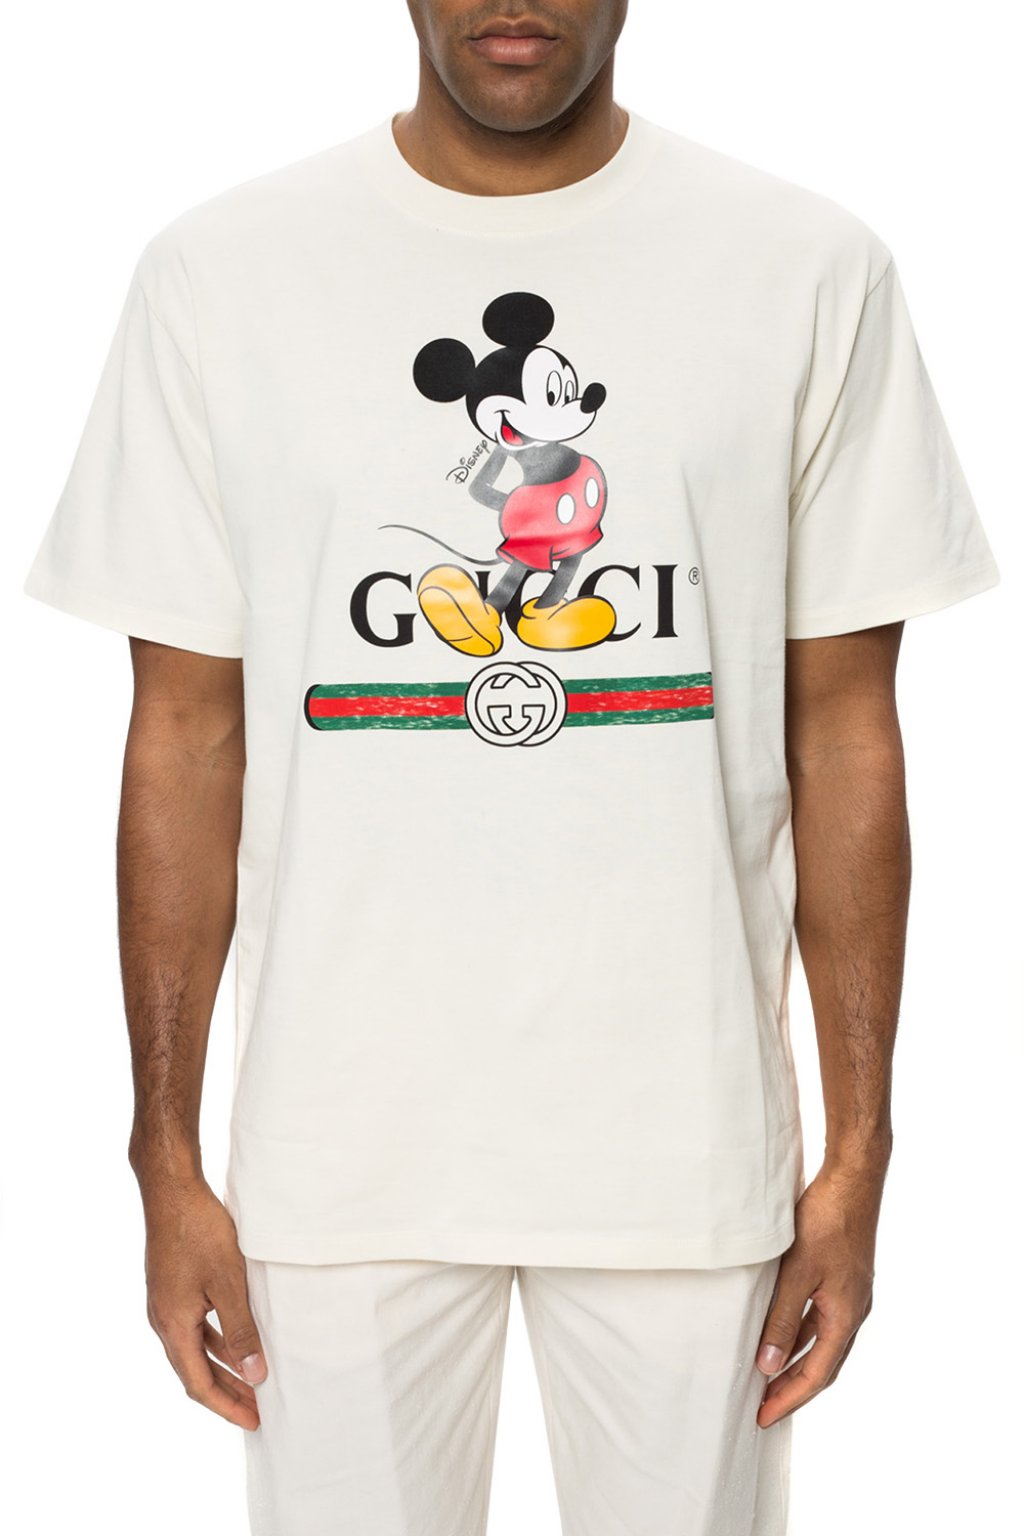 Gucci Gucci x Disney, Men's Clothing